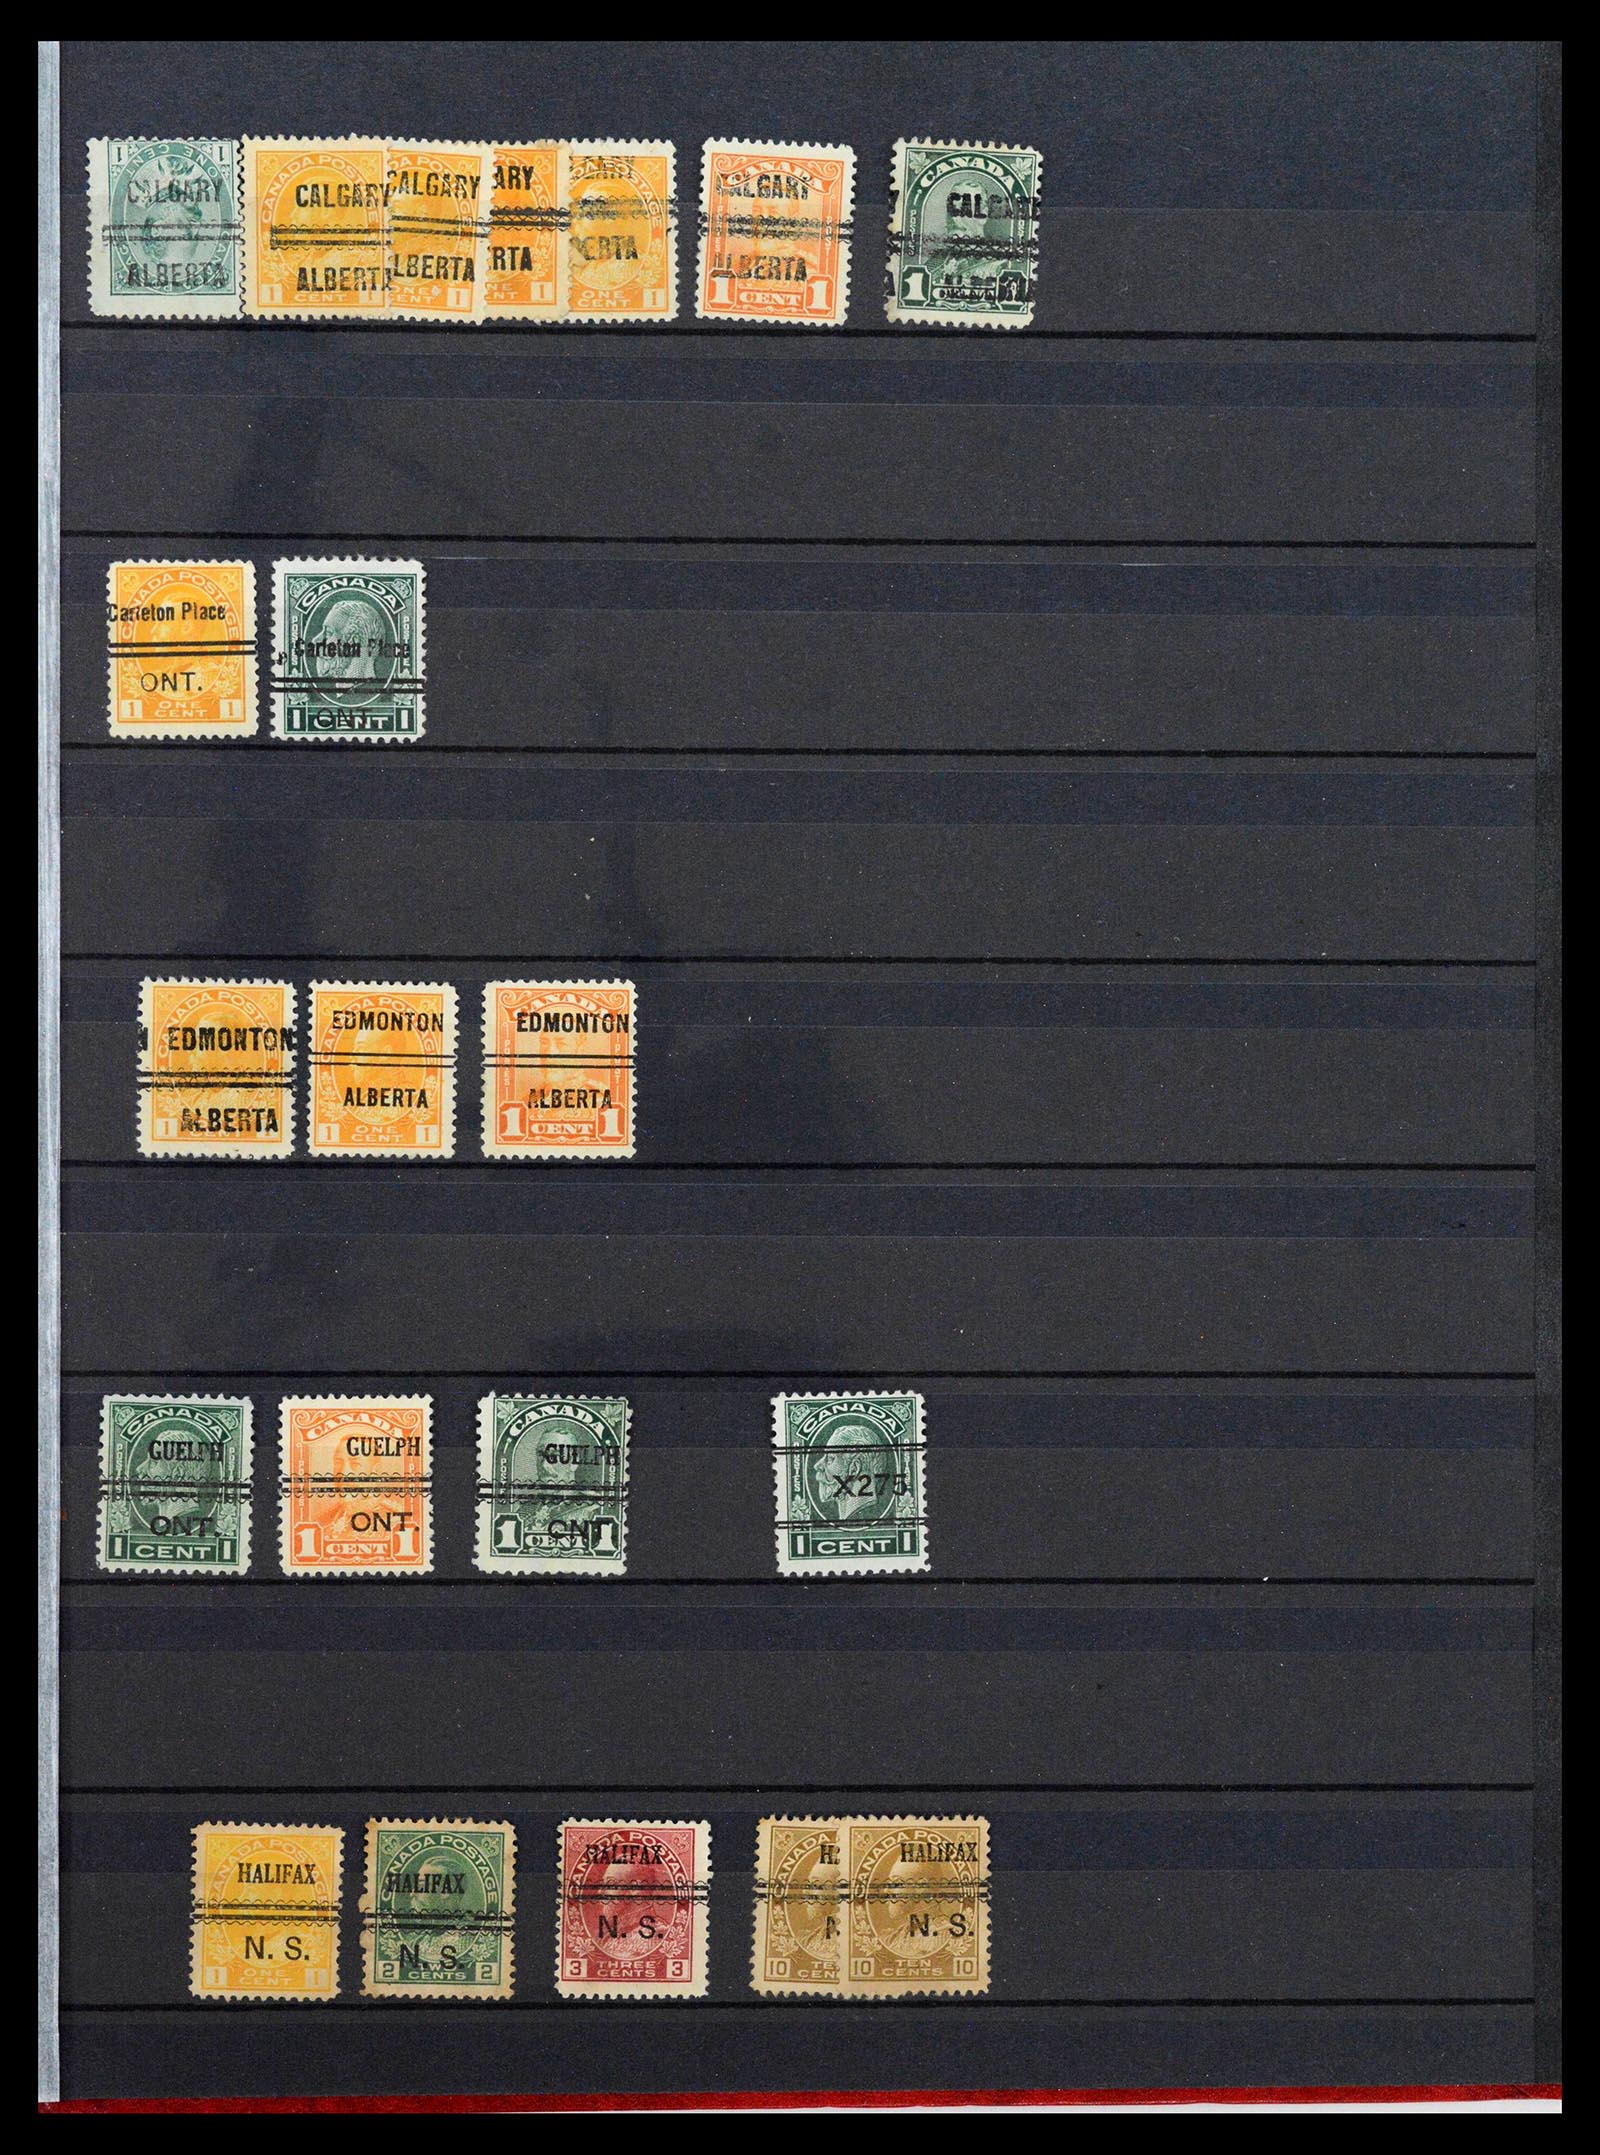 39484 0005 - Stamp collection 39484 Canada precancels 1880-1970.